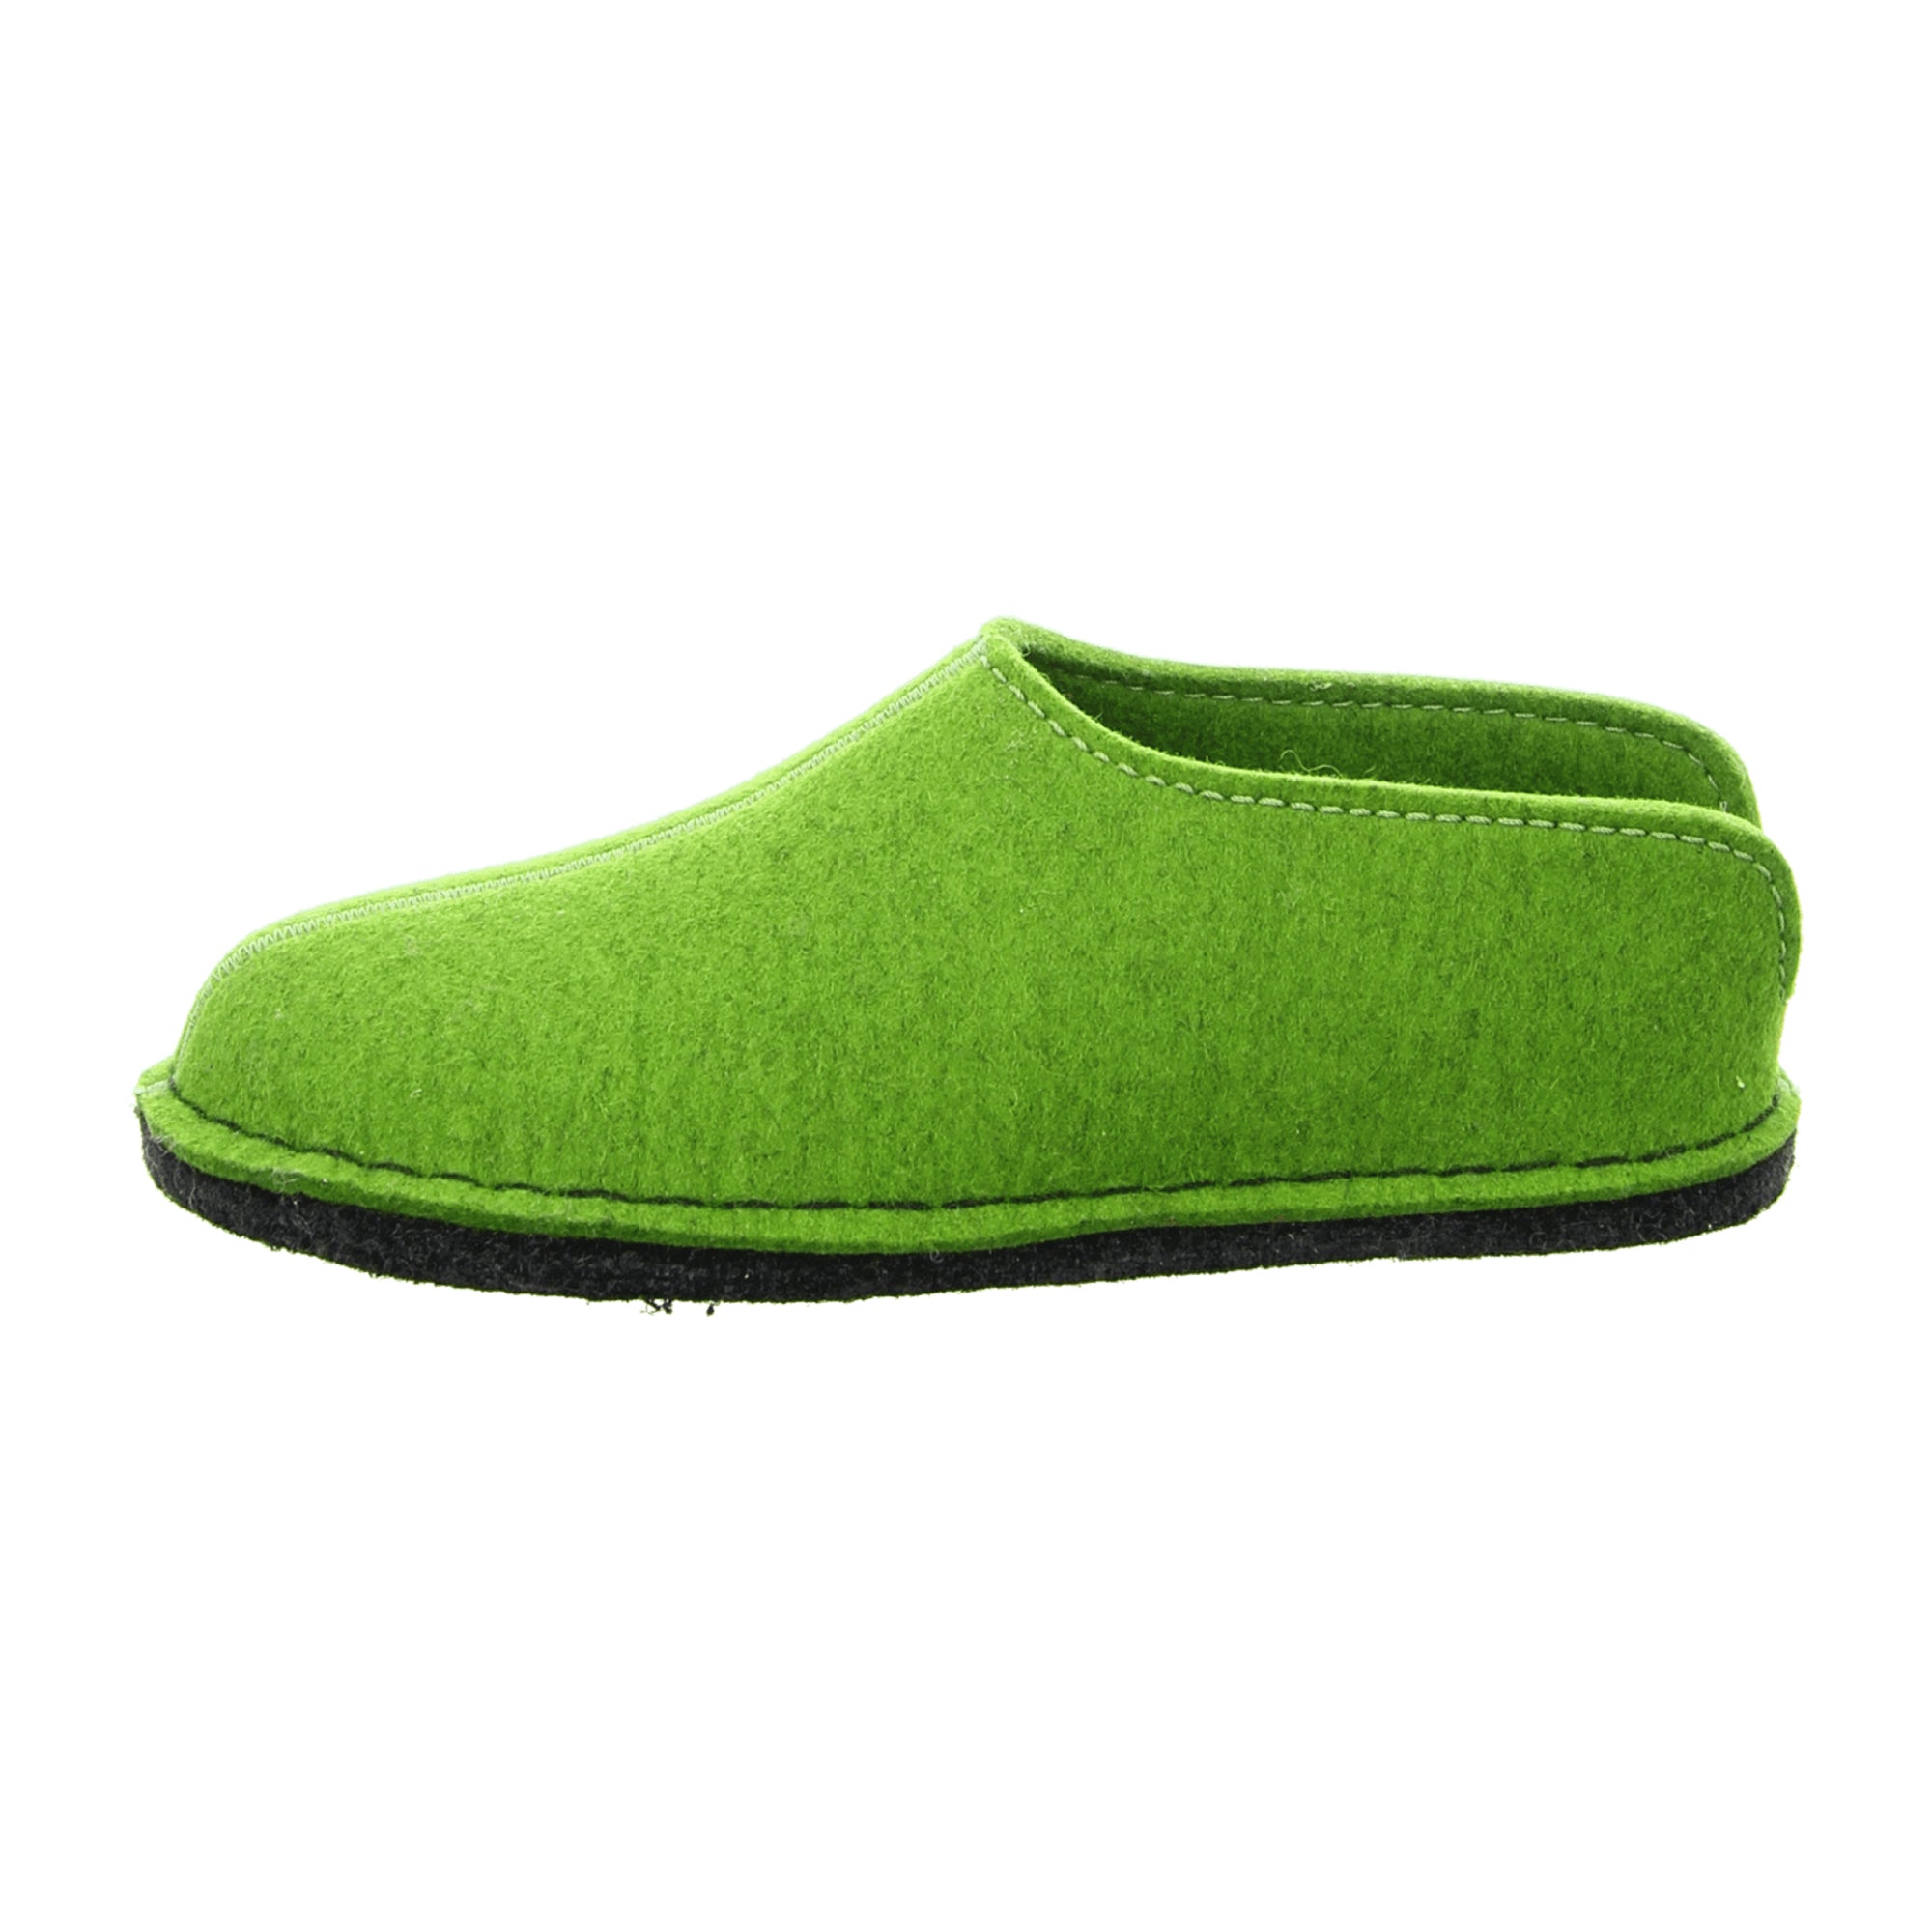 Haflinger 311013 Men's Comfort Slippers, Trendy Green